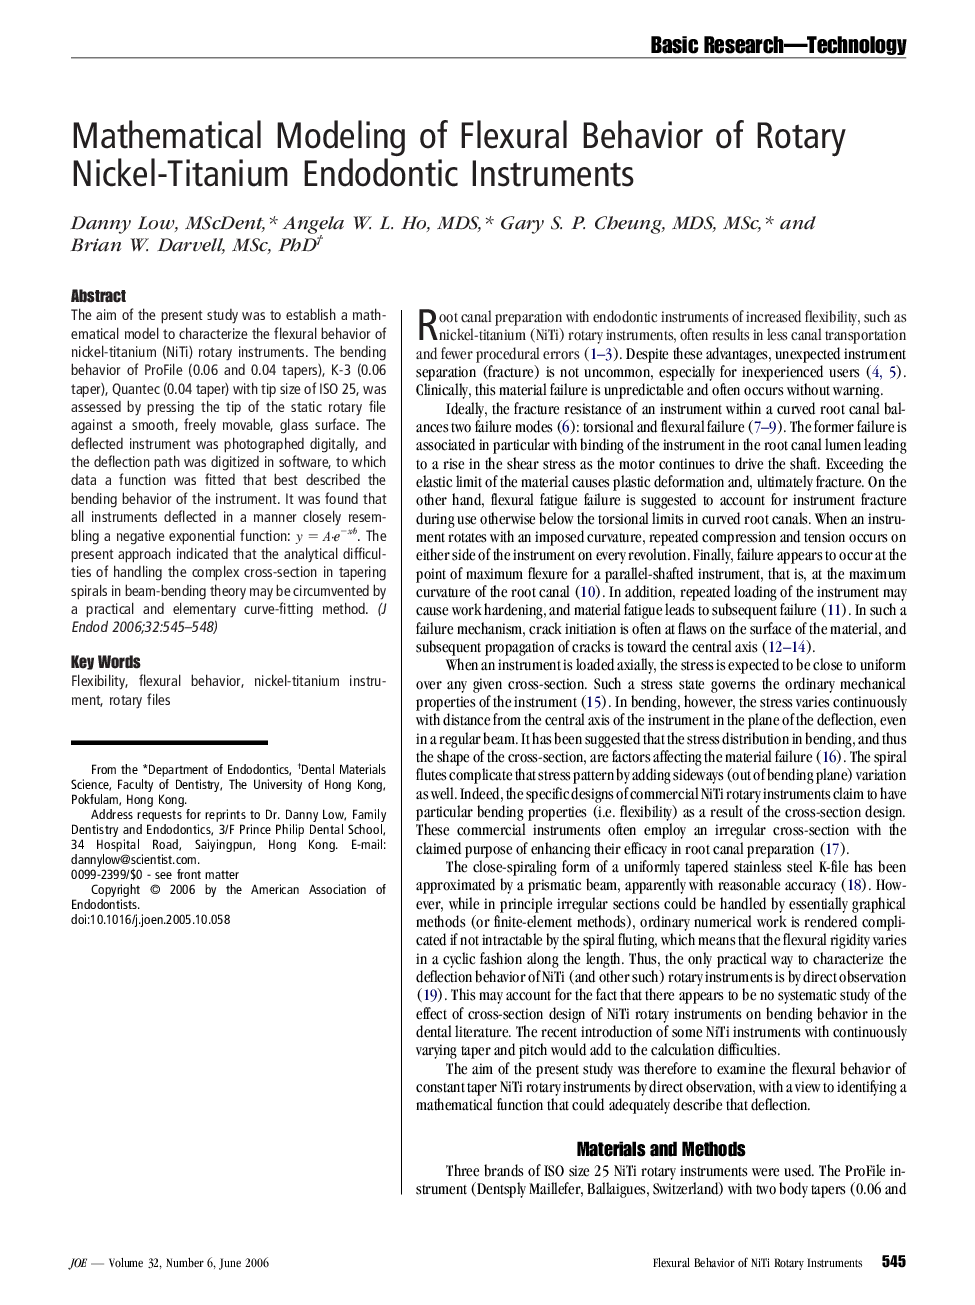 Mathematical Modeling of Flexural Behavior of Rotary Nickel-Titanium Endodontic Instruments